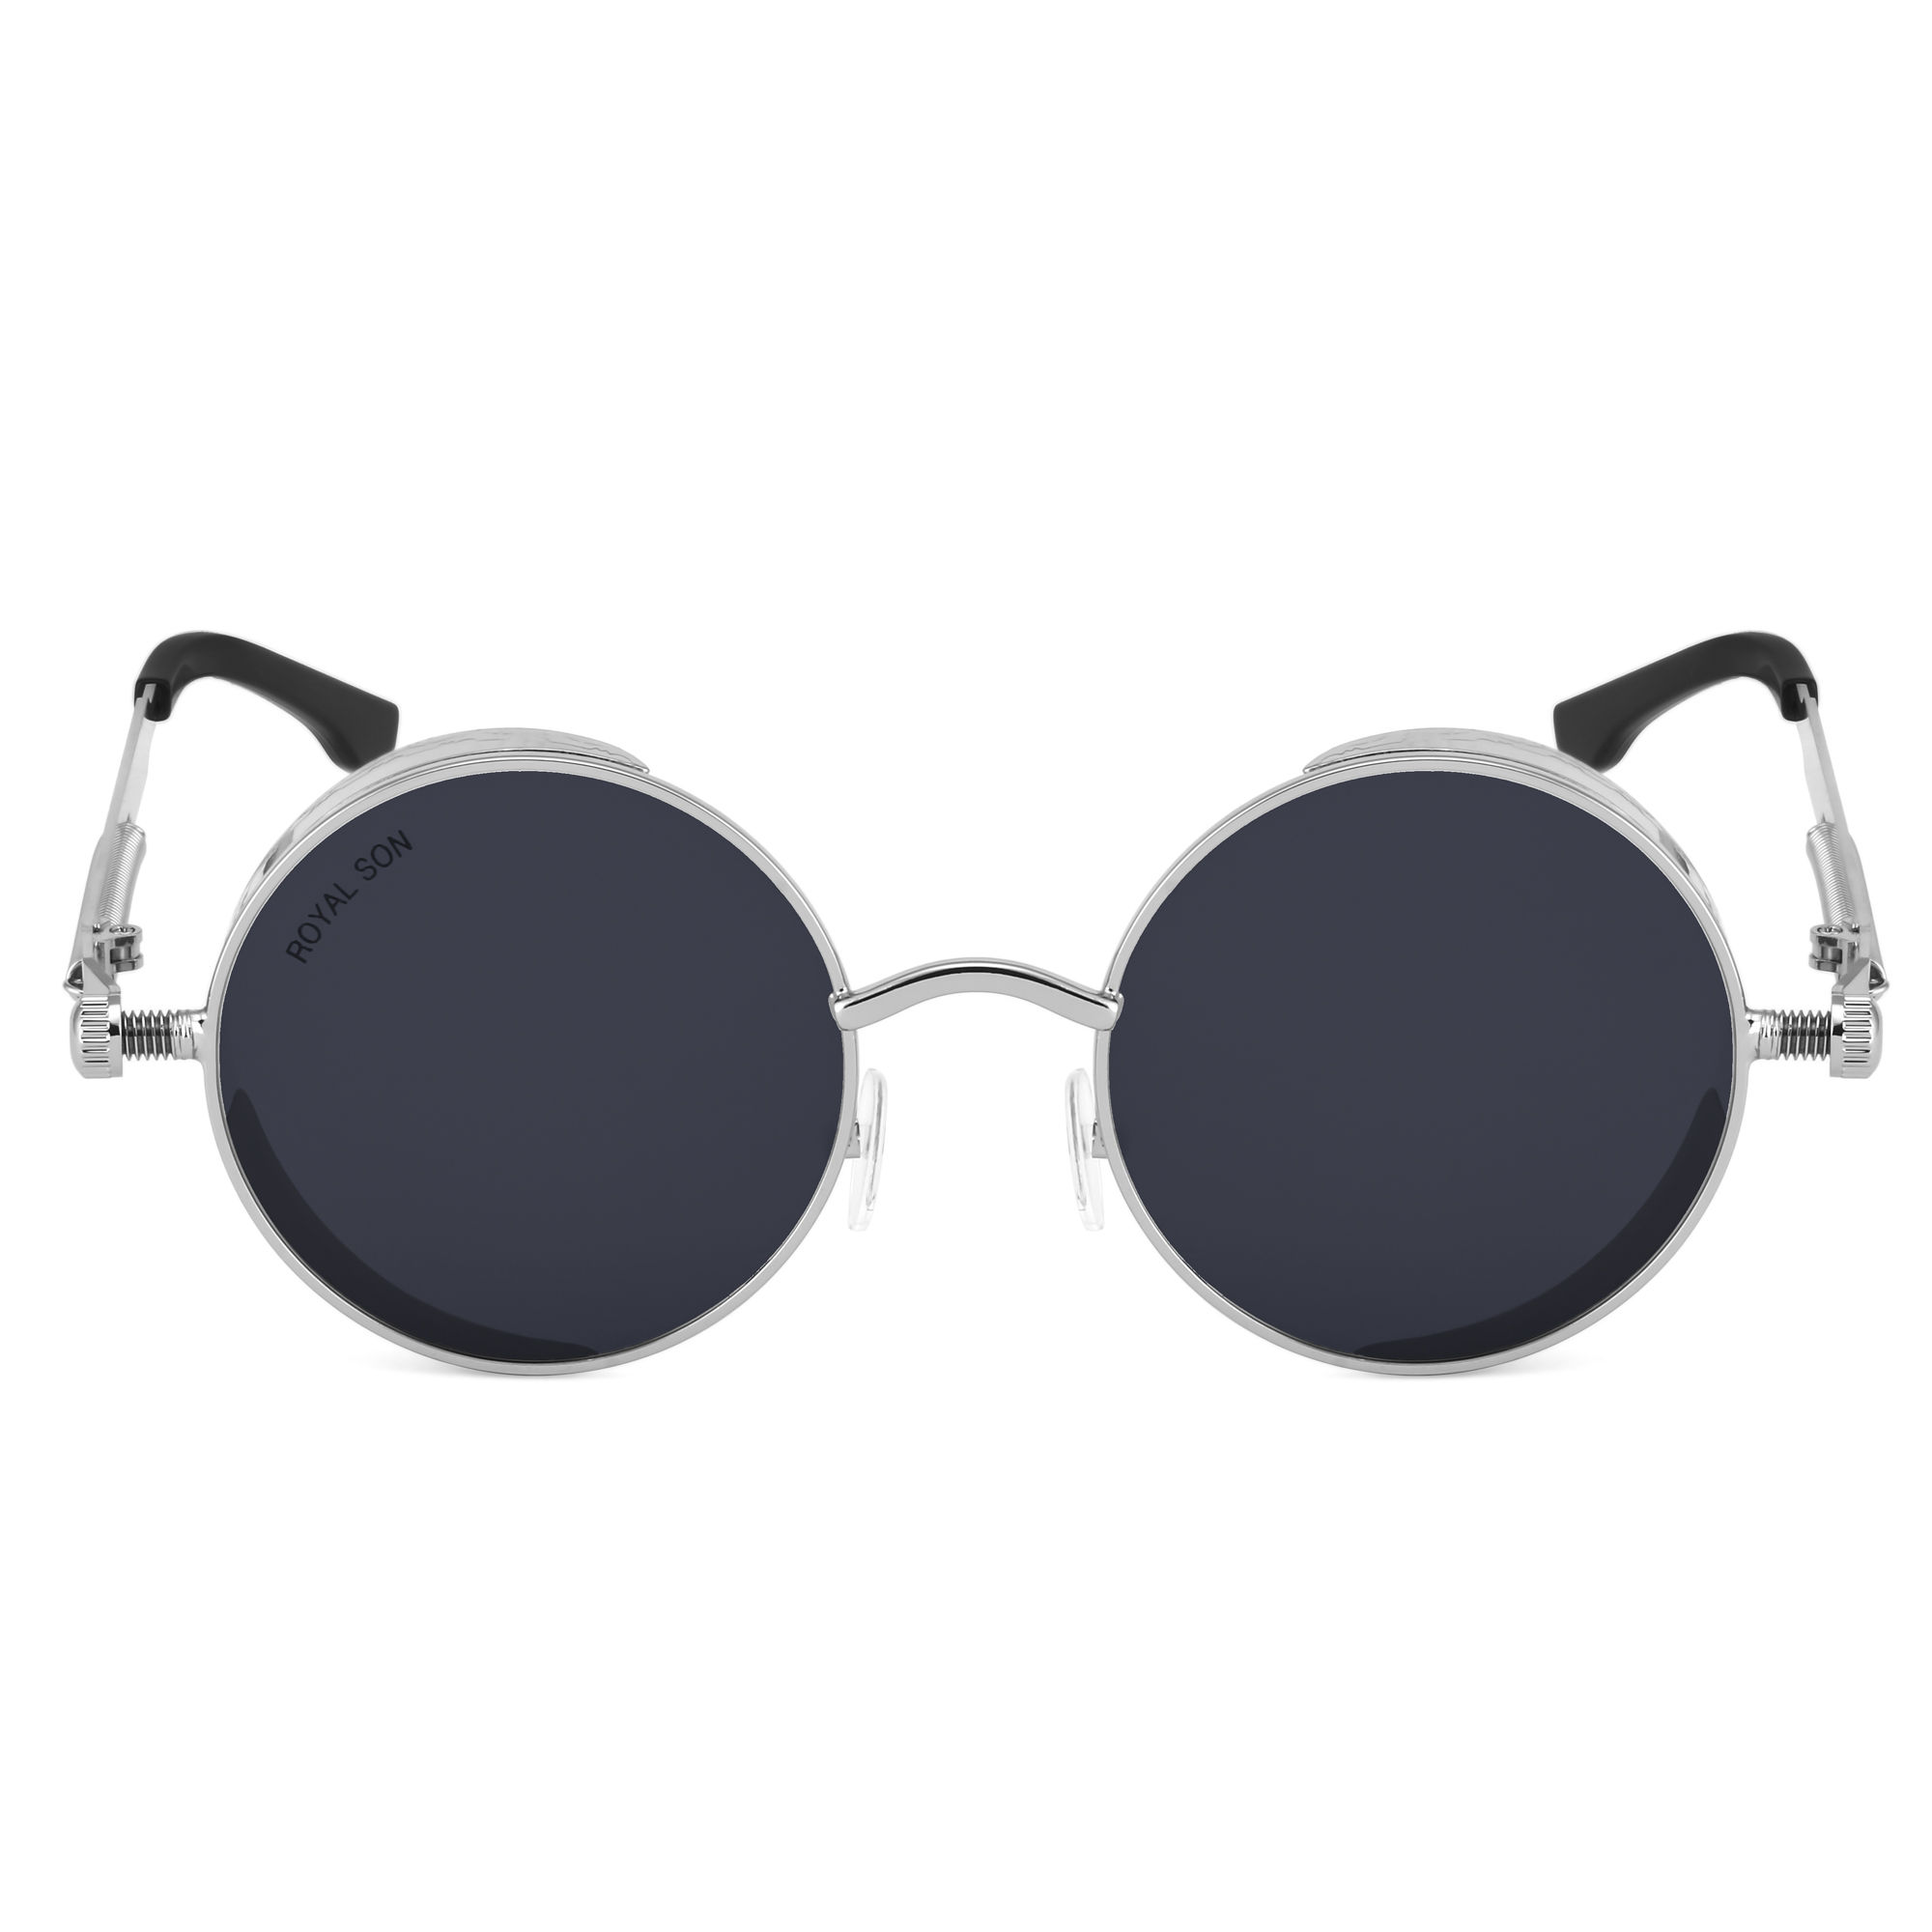 Royal Son Black Polarized Steampunk Round Sunglasses